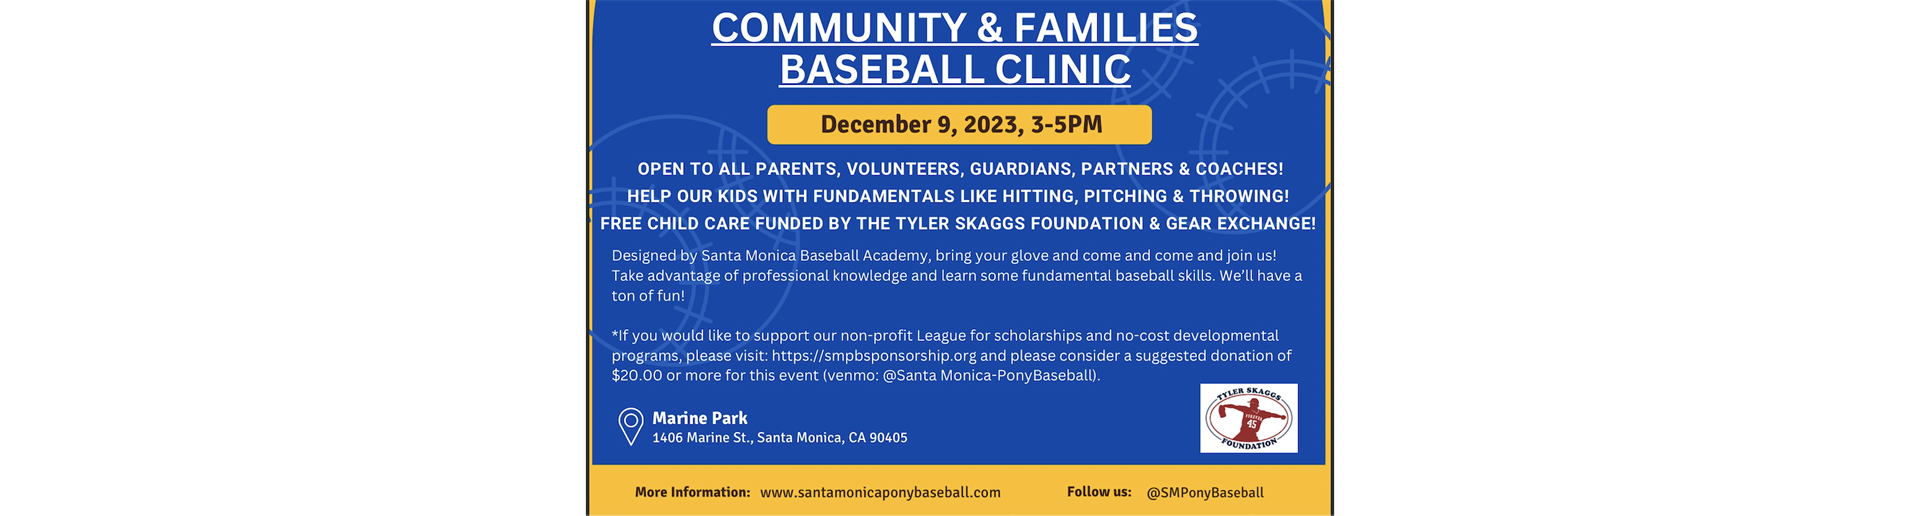 Community & Families Baseball Clinic